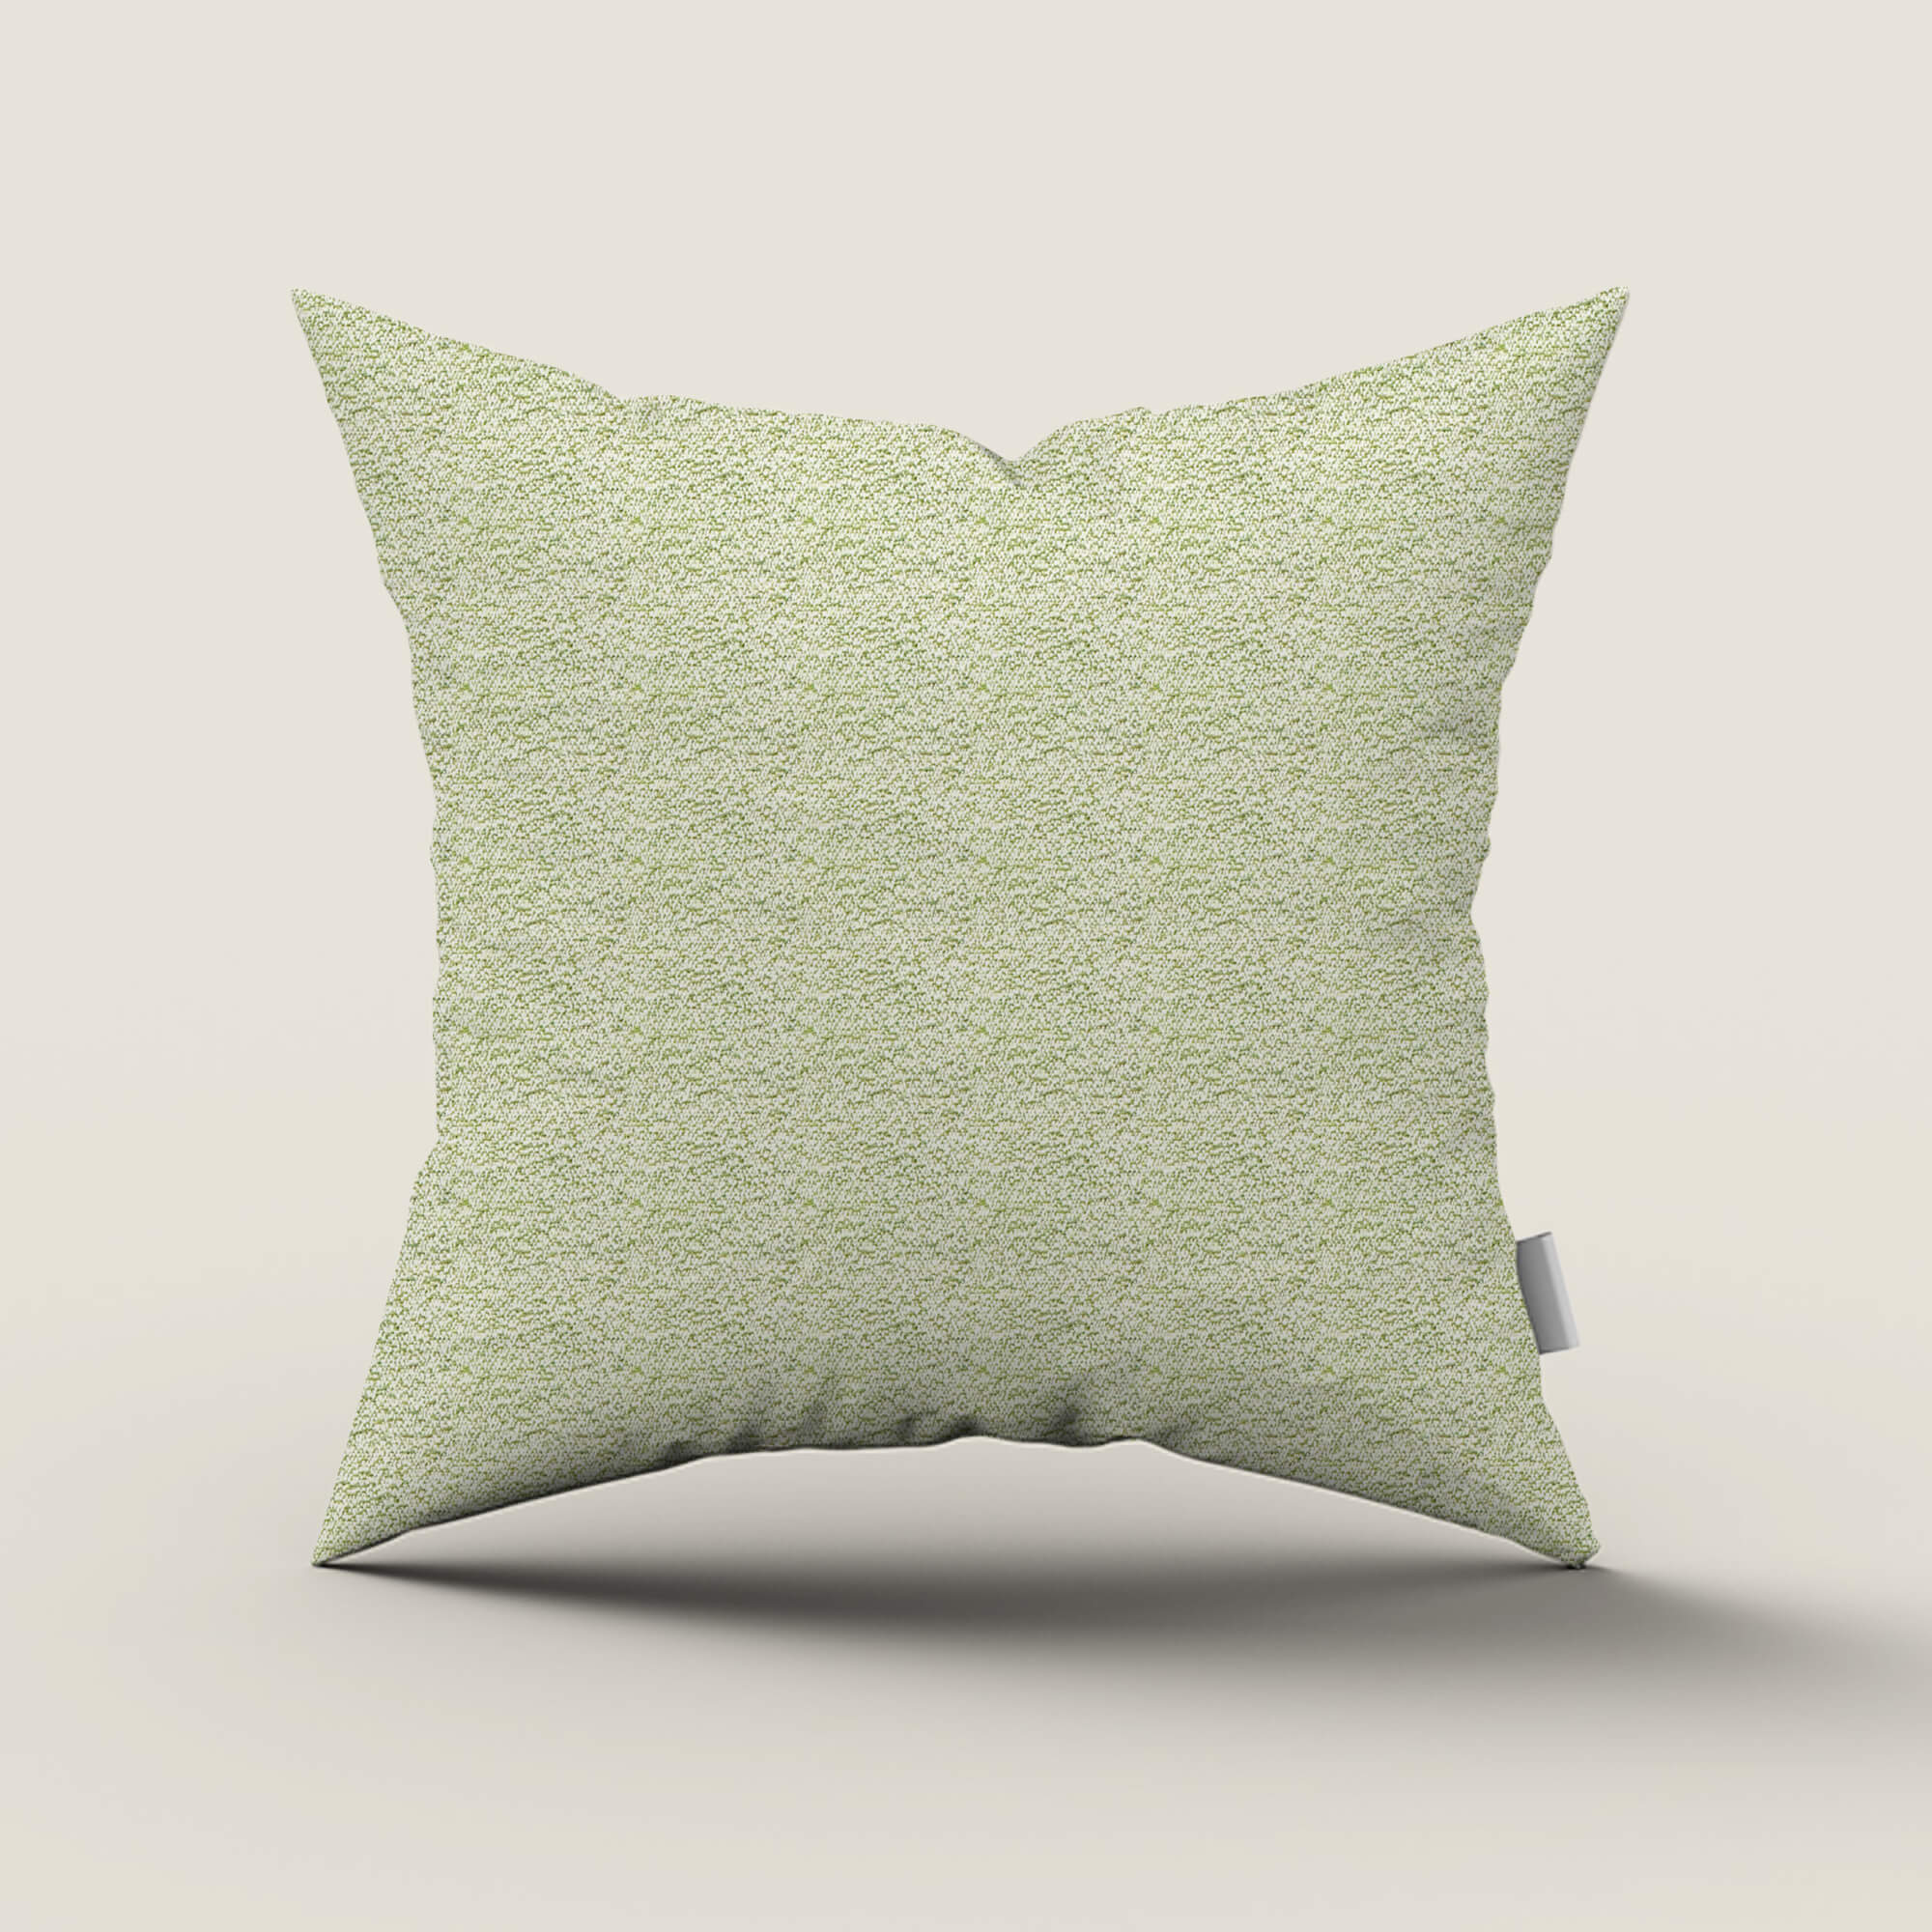 PENGI Waterproof Outdoor Pillow Case 1 Pcs - Desert Snow Green